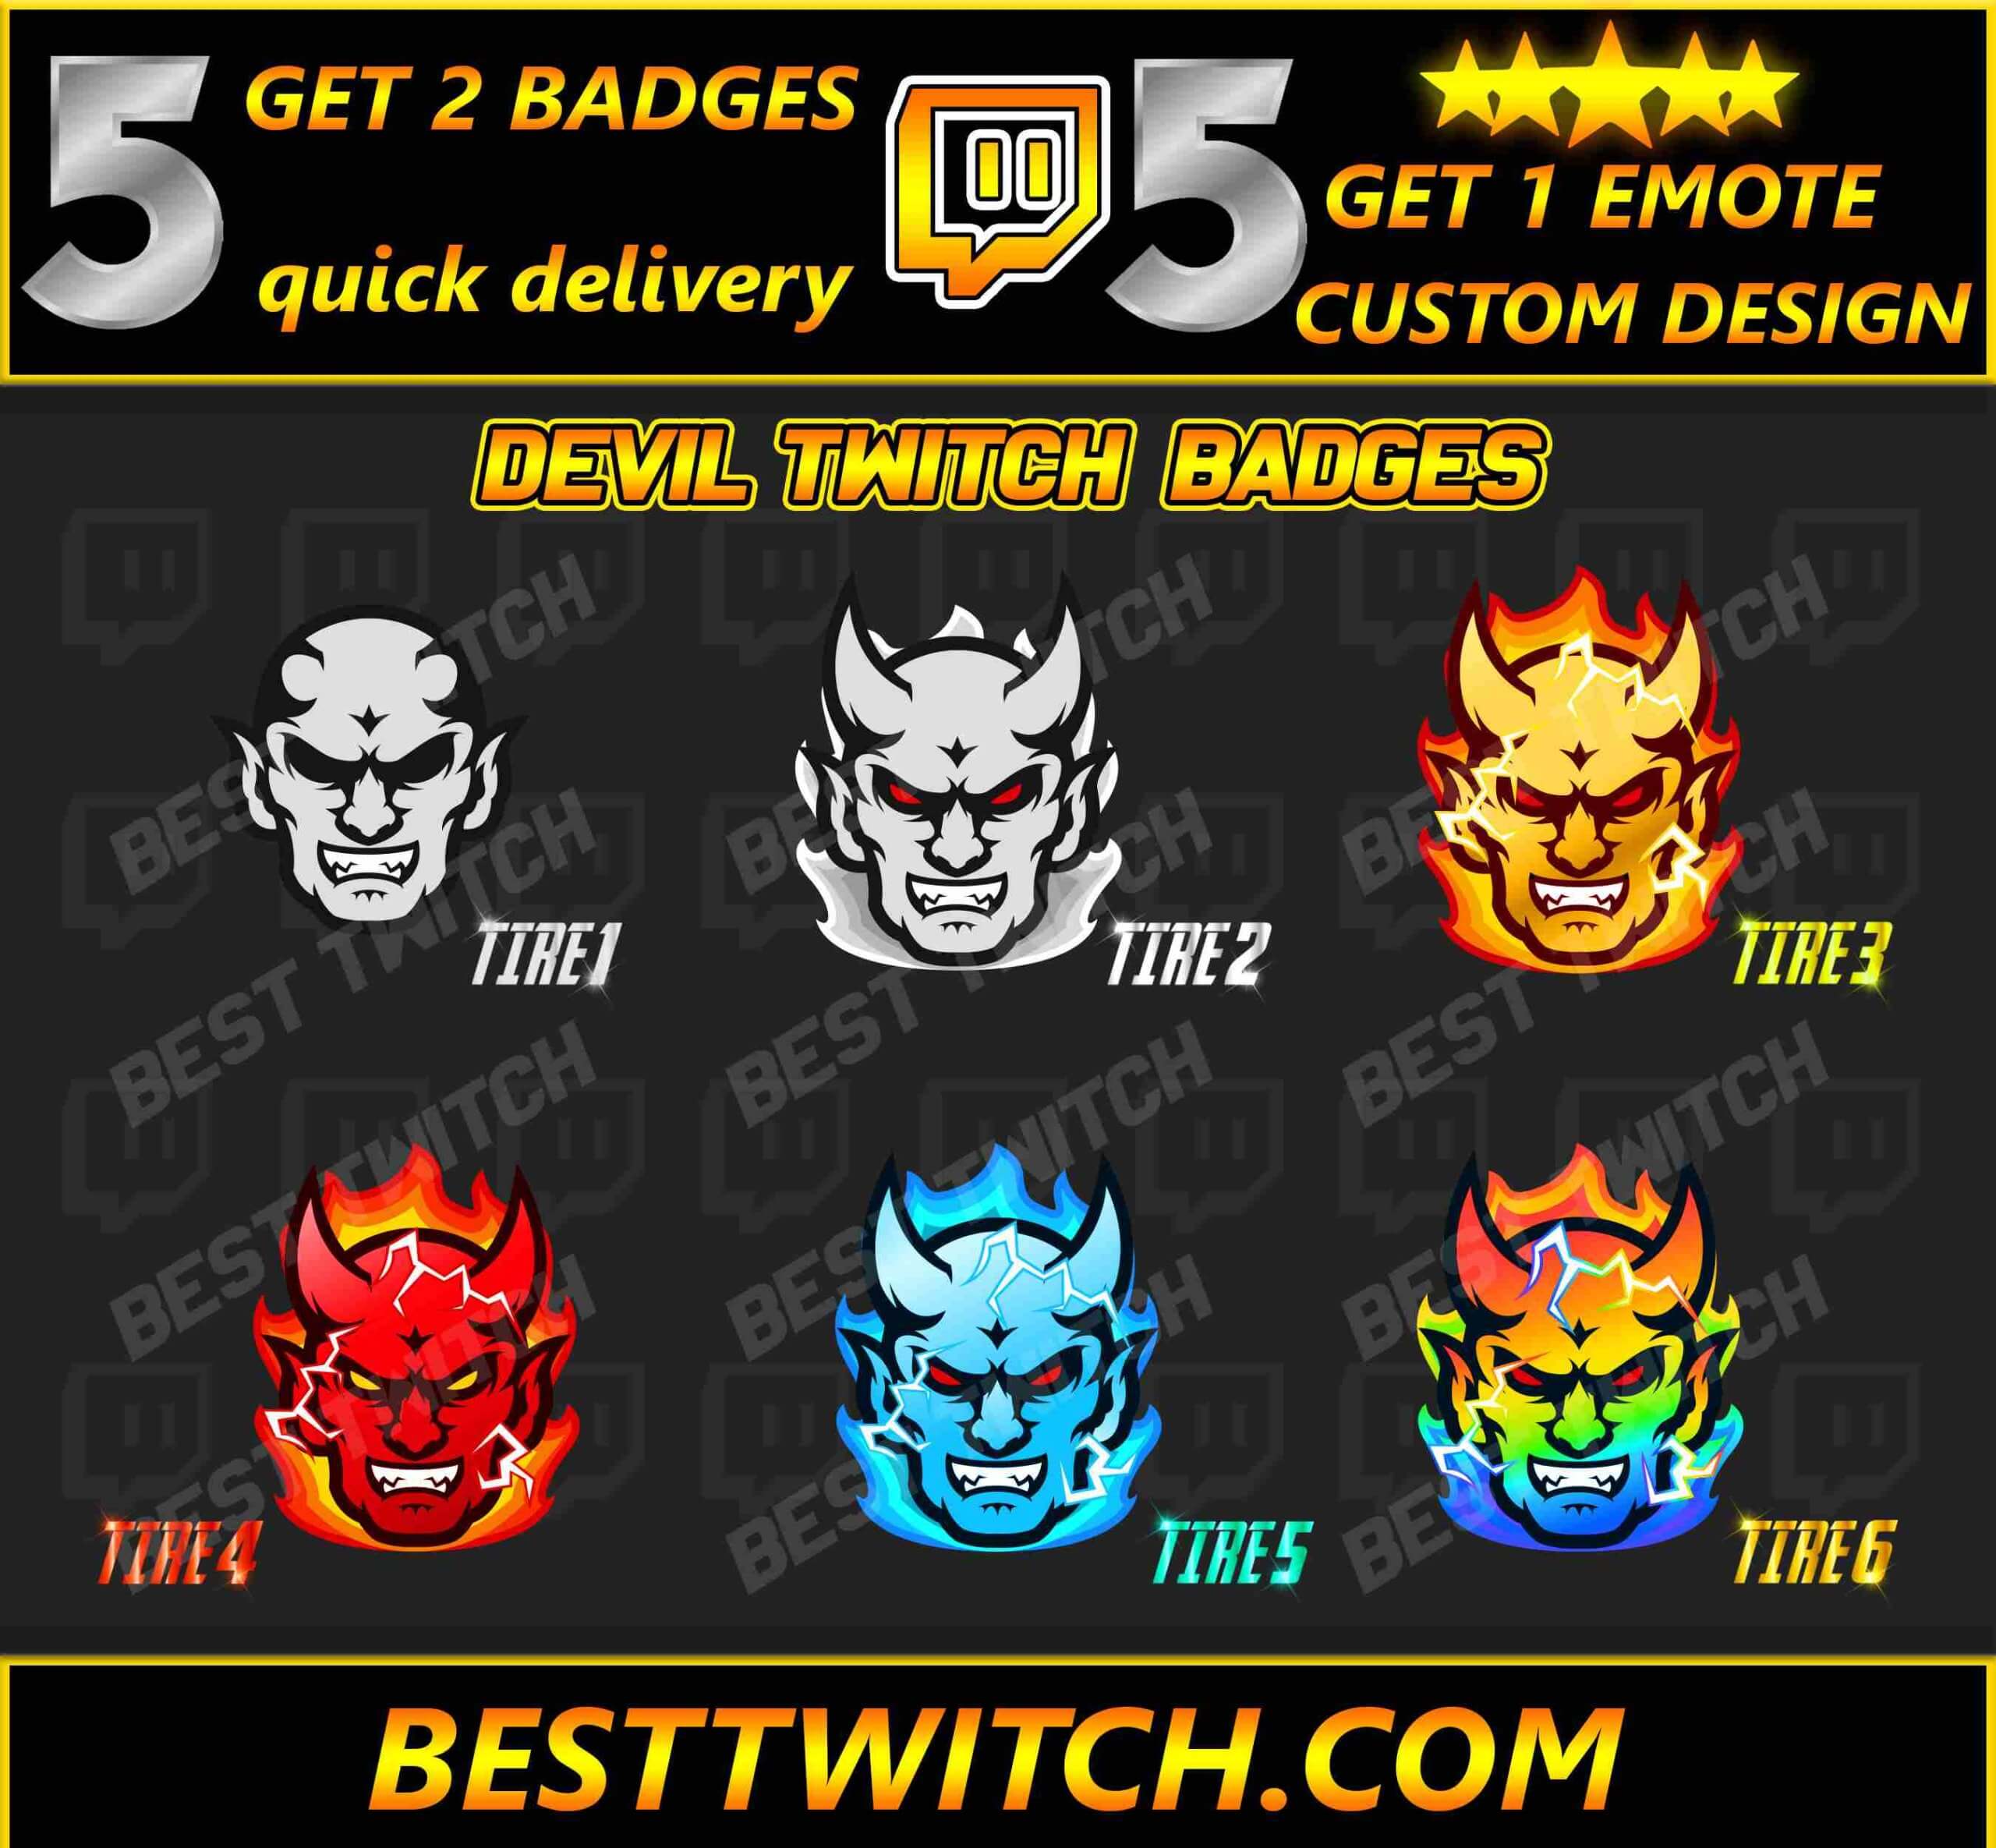 Devil head badge emotes twitch Discord YouTube sub badges